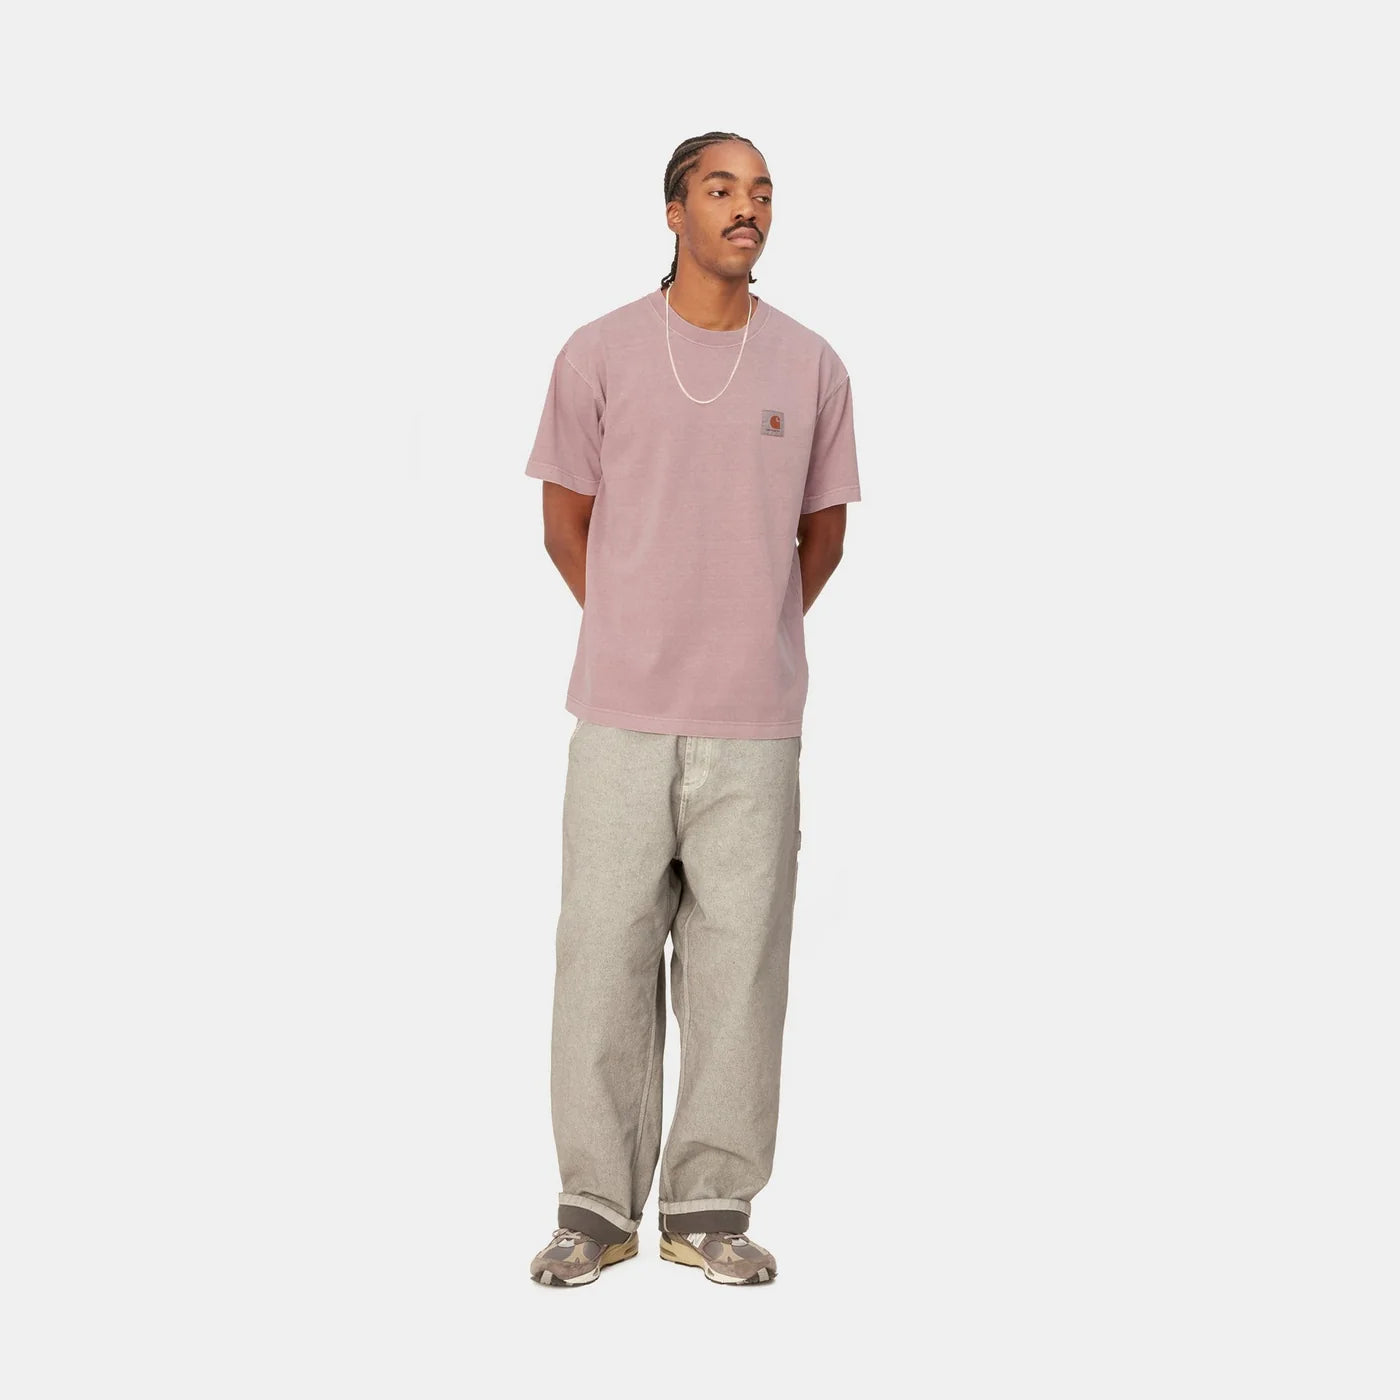 Carhartt WIP S/S Vista T-Shirt (Glassy Pink garment dyed)